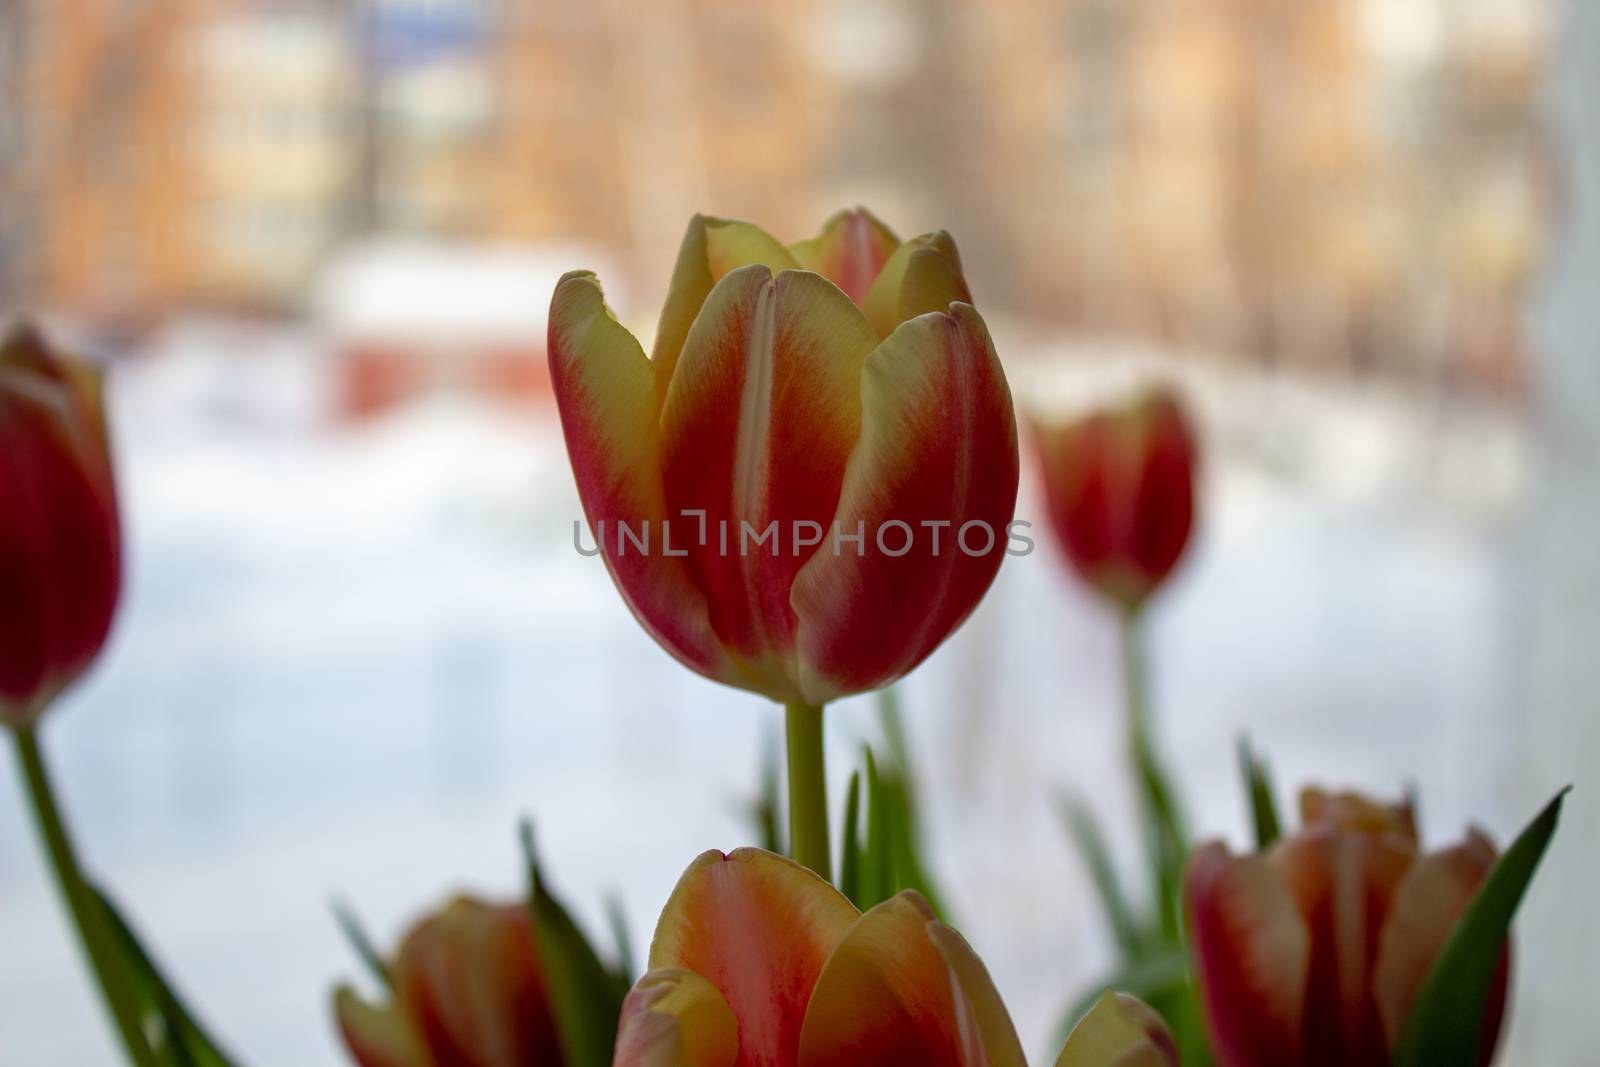 Tulip Bud close-up. Flowers. Romance love spring